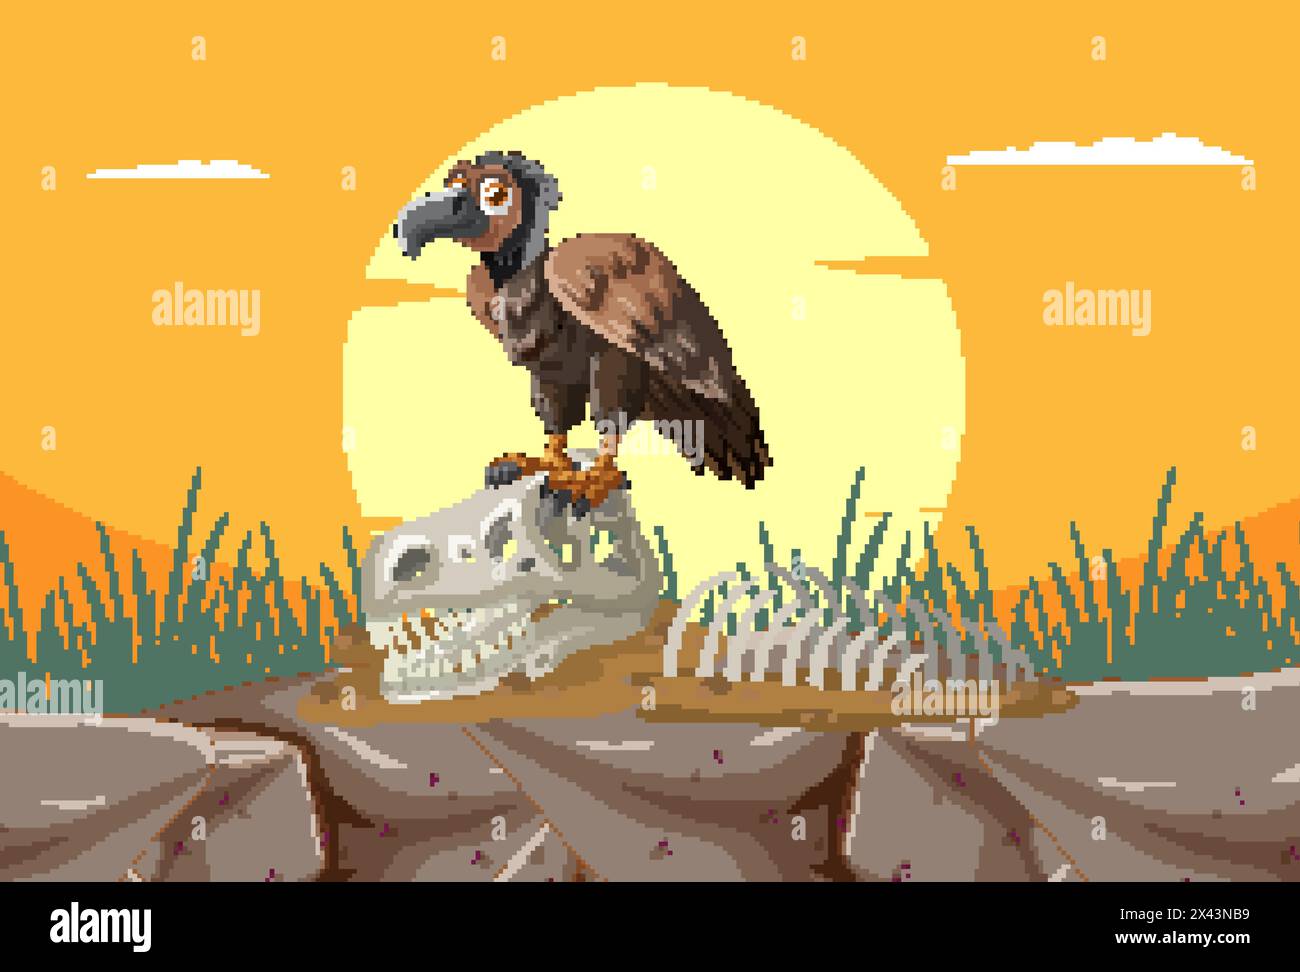 Cartoon vulture on skeleton in arid landscape Stock Vector